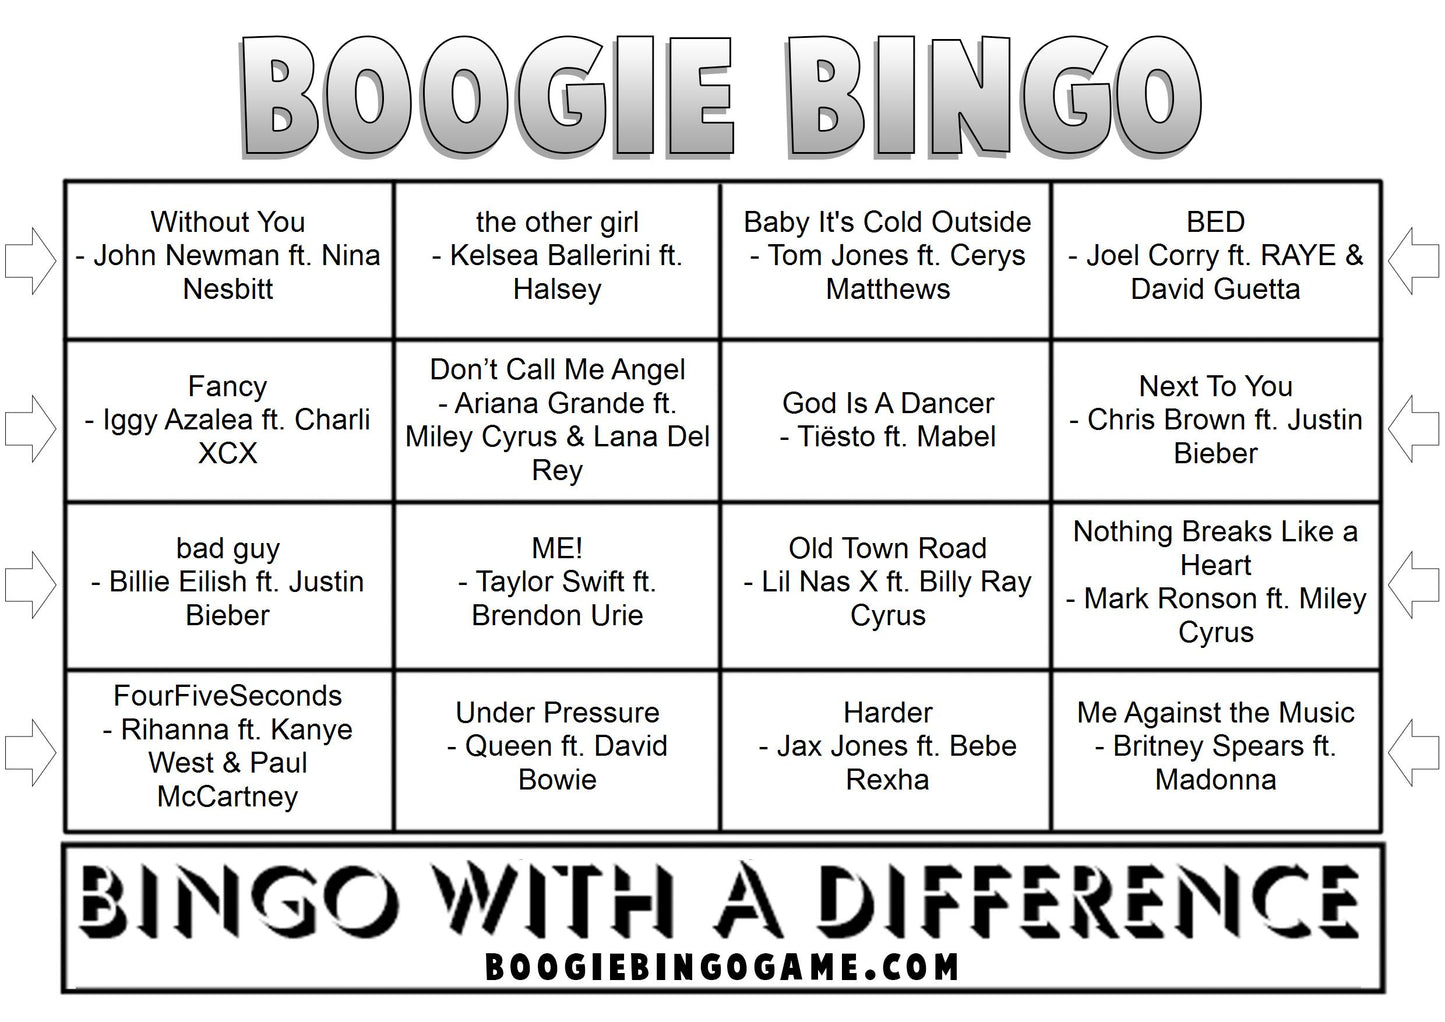 Game 84 | Collaborations | Boogie Bingo | Printable Music Bingo Tickets